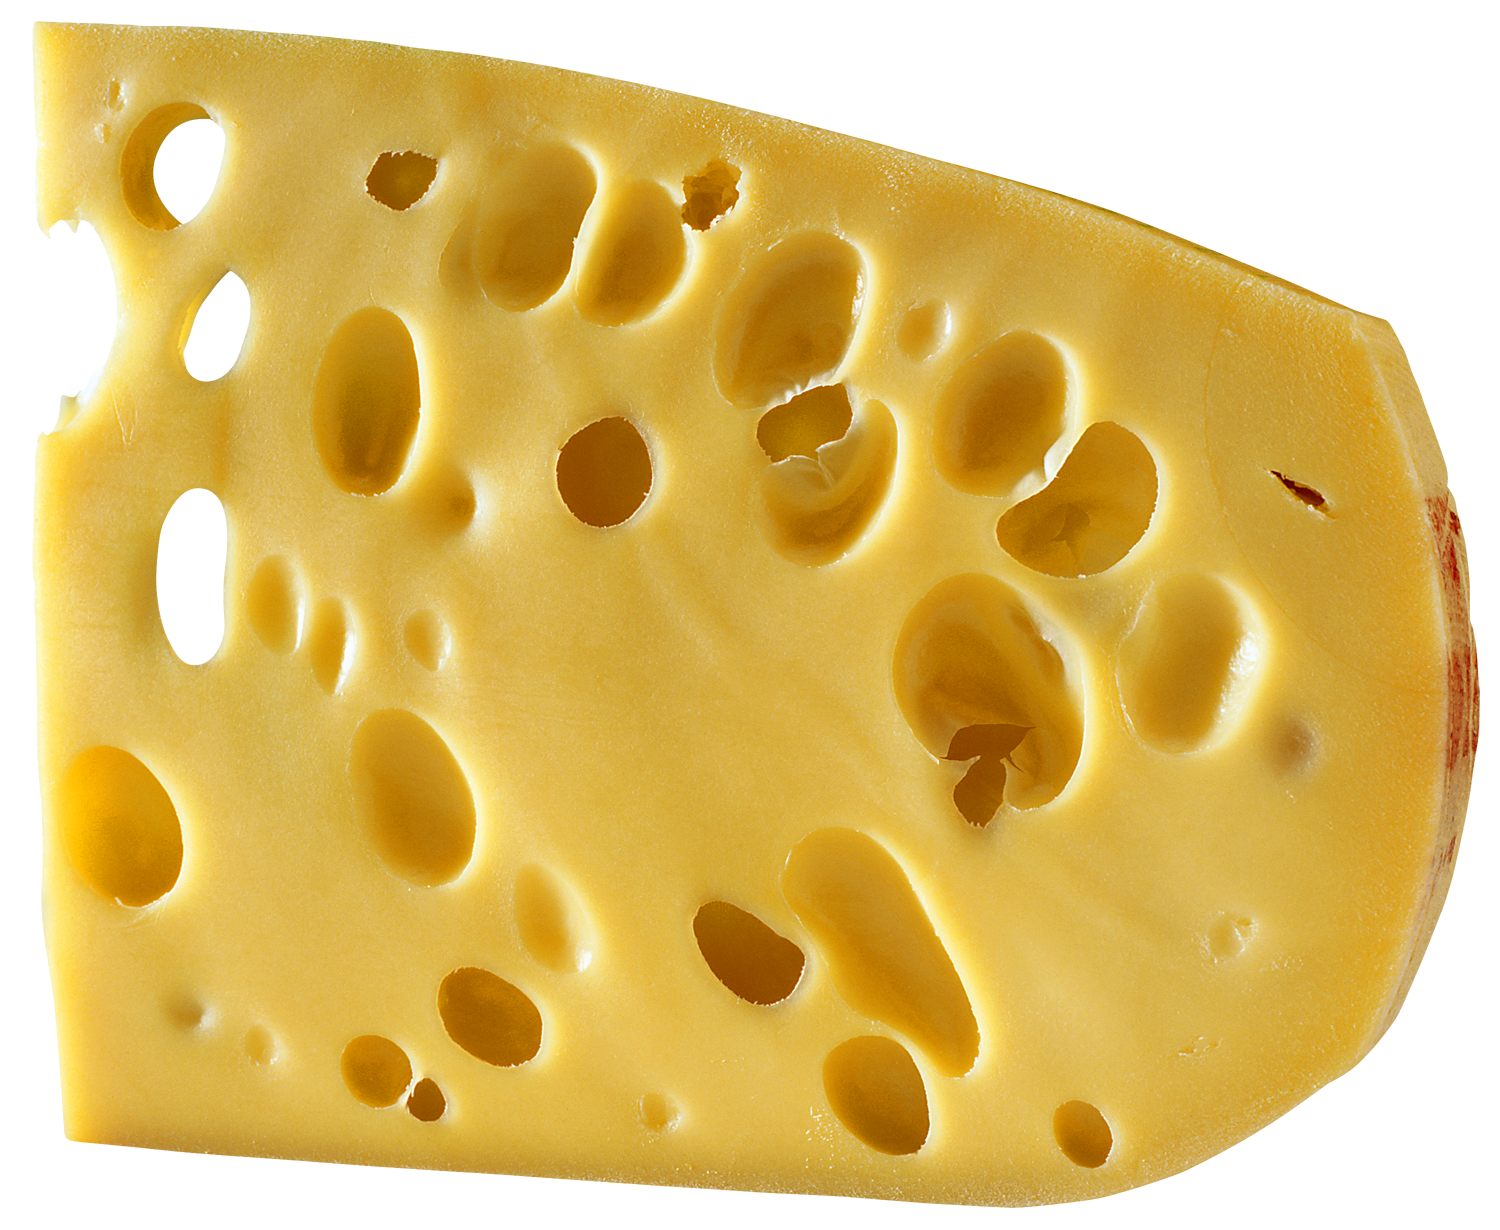 Сыр Маасдам Swiss. Сыр швейцарский Маасдам. Маасдам Джагибо. Дырки в сыре. Сыр з дырочками